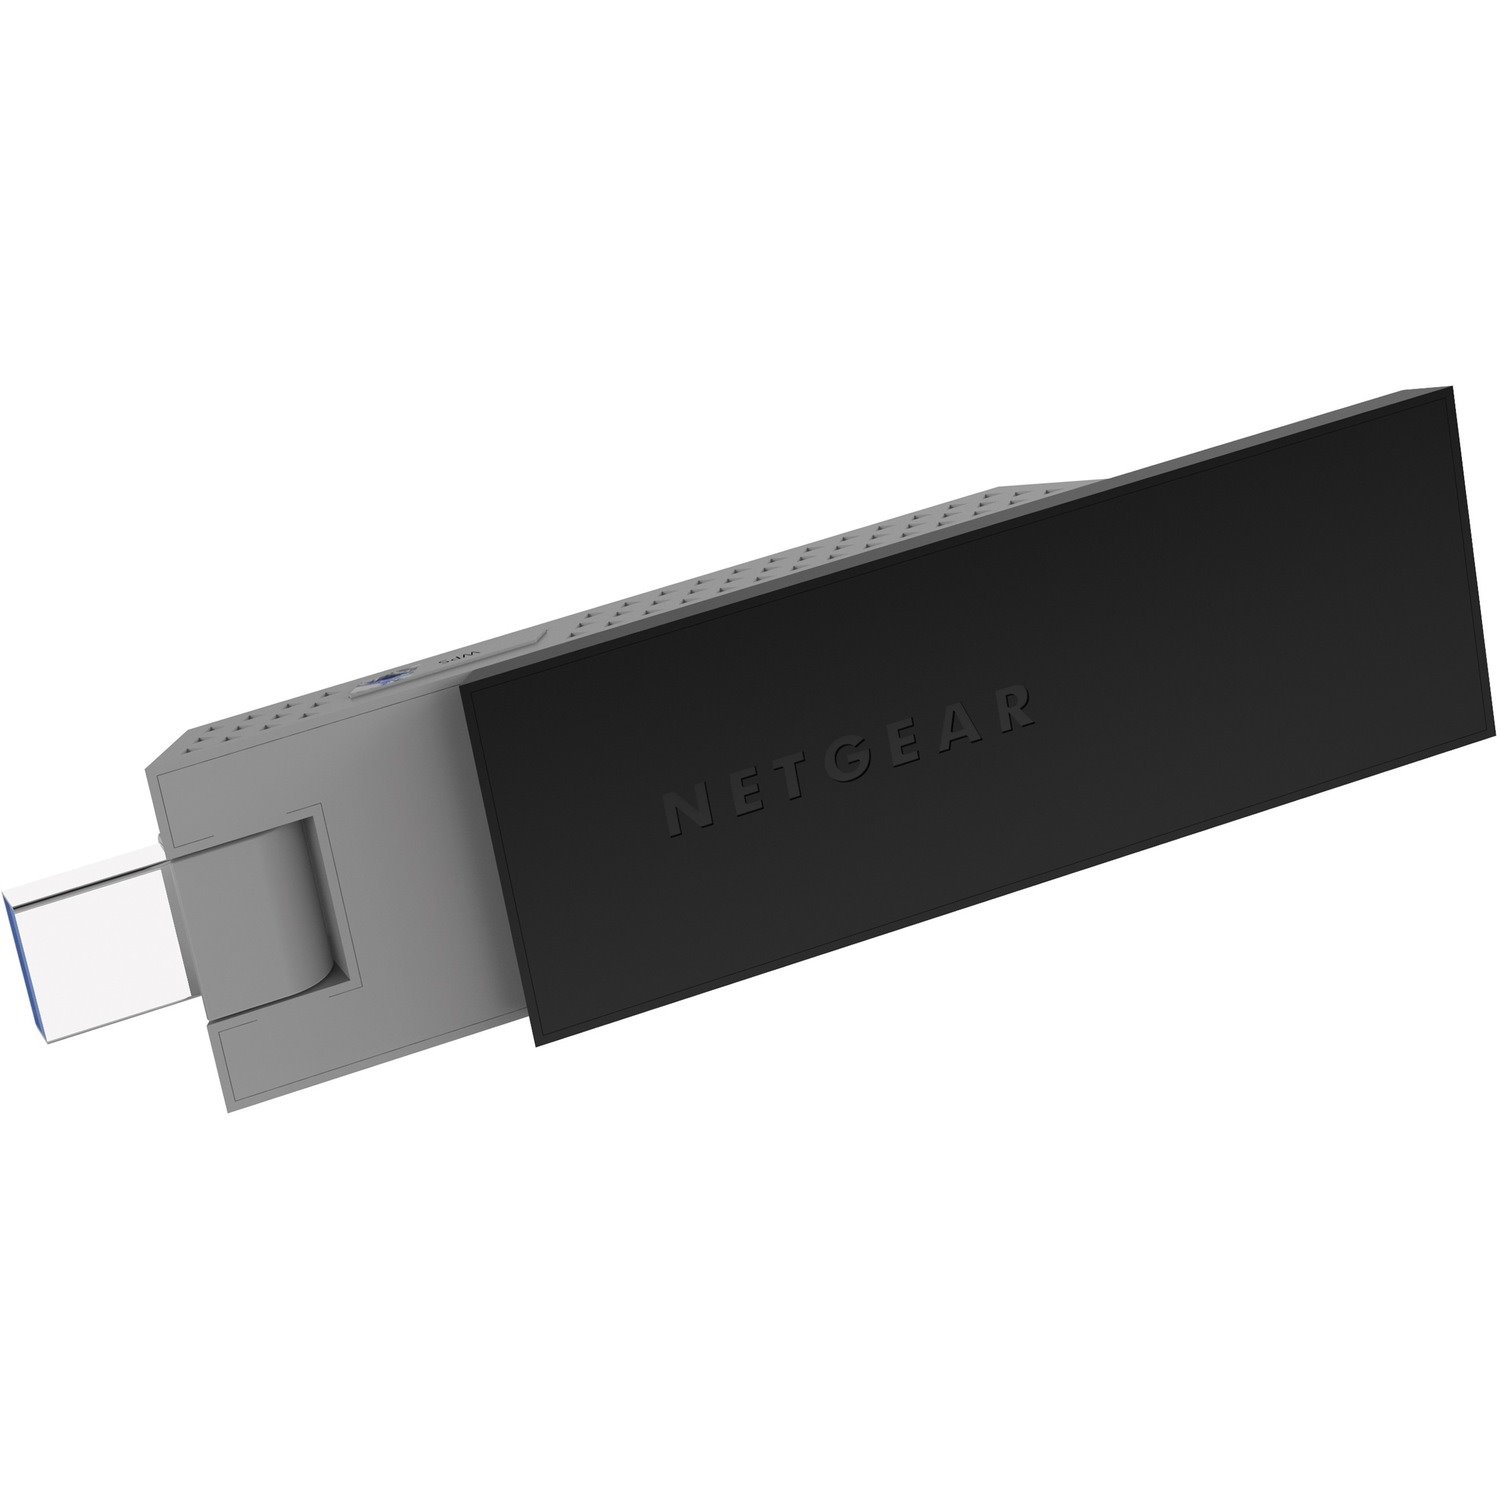 NETGEAR A6210 Wireless AC1200 USB Adapter